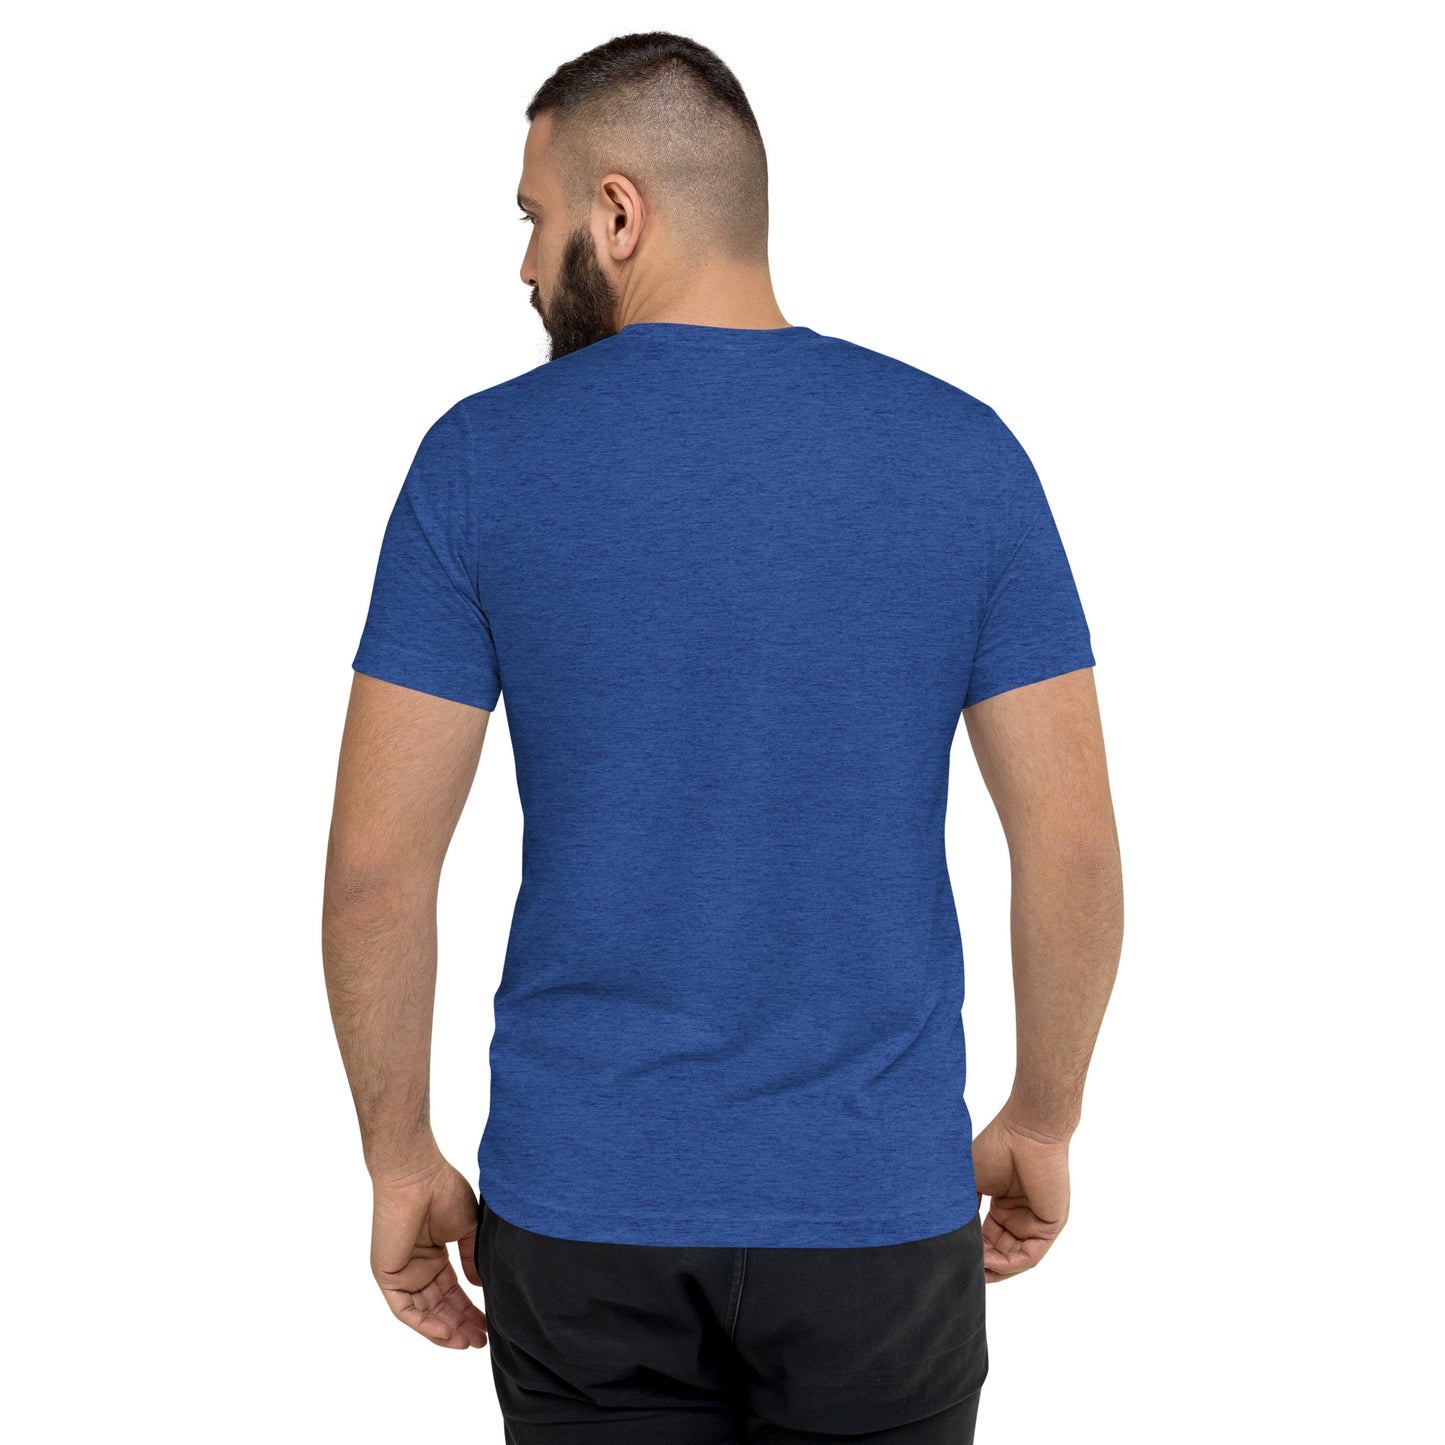 213 LA Strong Short Sleeve Tri-Blend T-Shirt